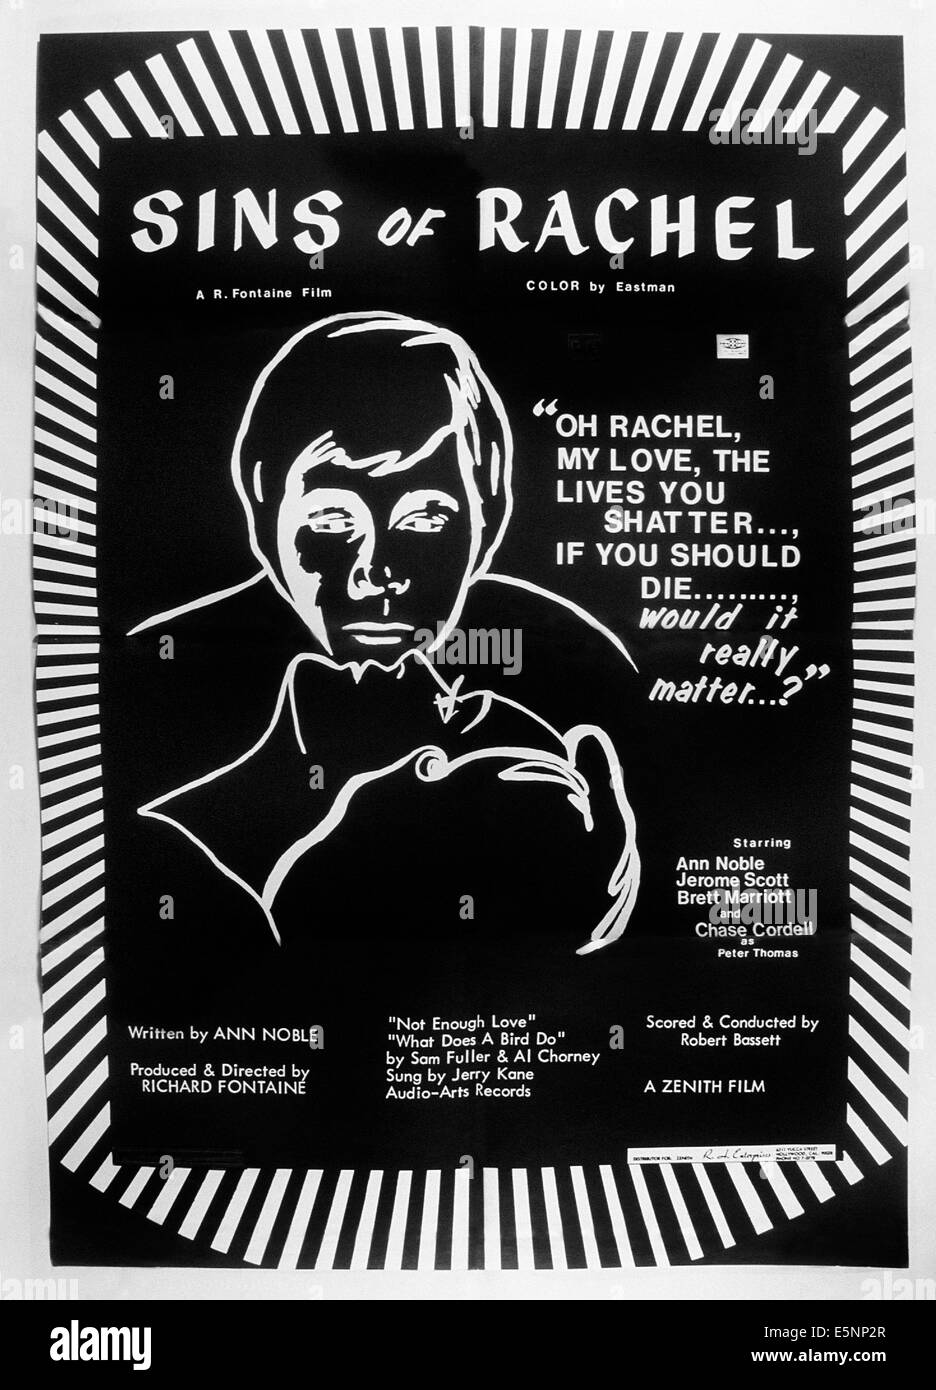 SINS OF RACHEL, US poster art, 1972 Stock Photo